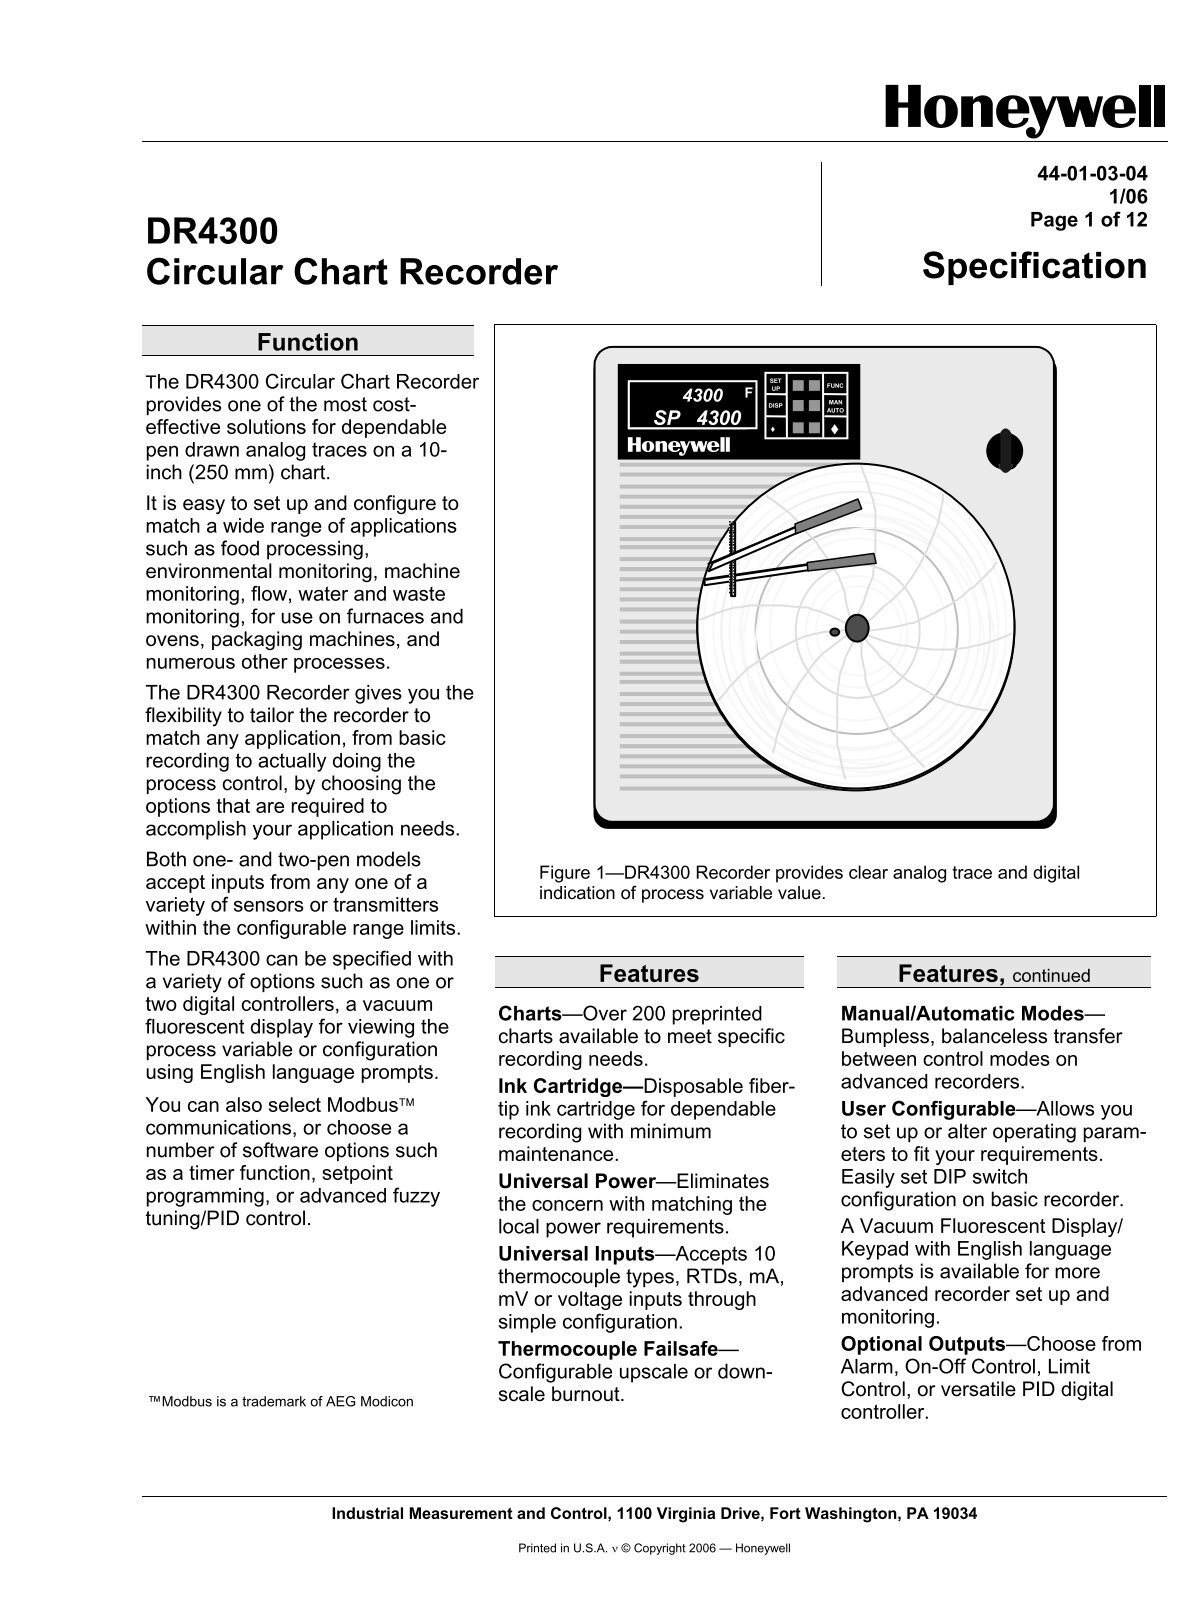 Vacuum Chart Recorder